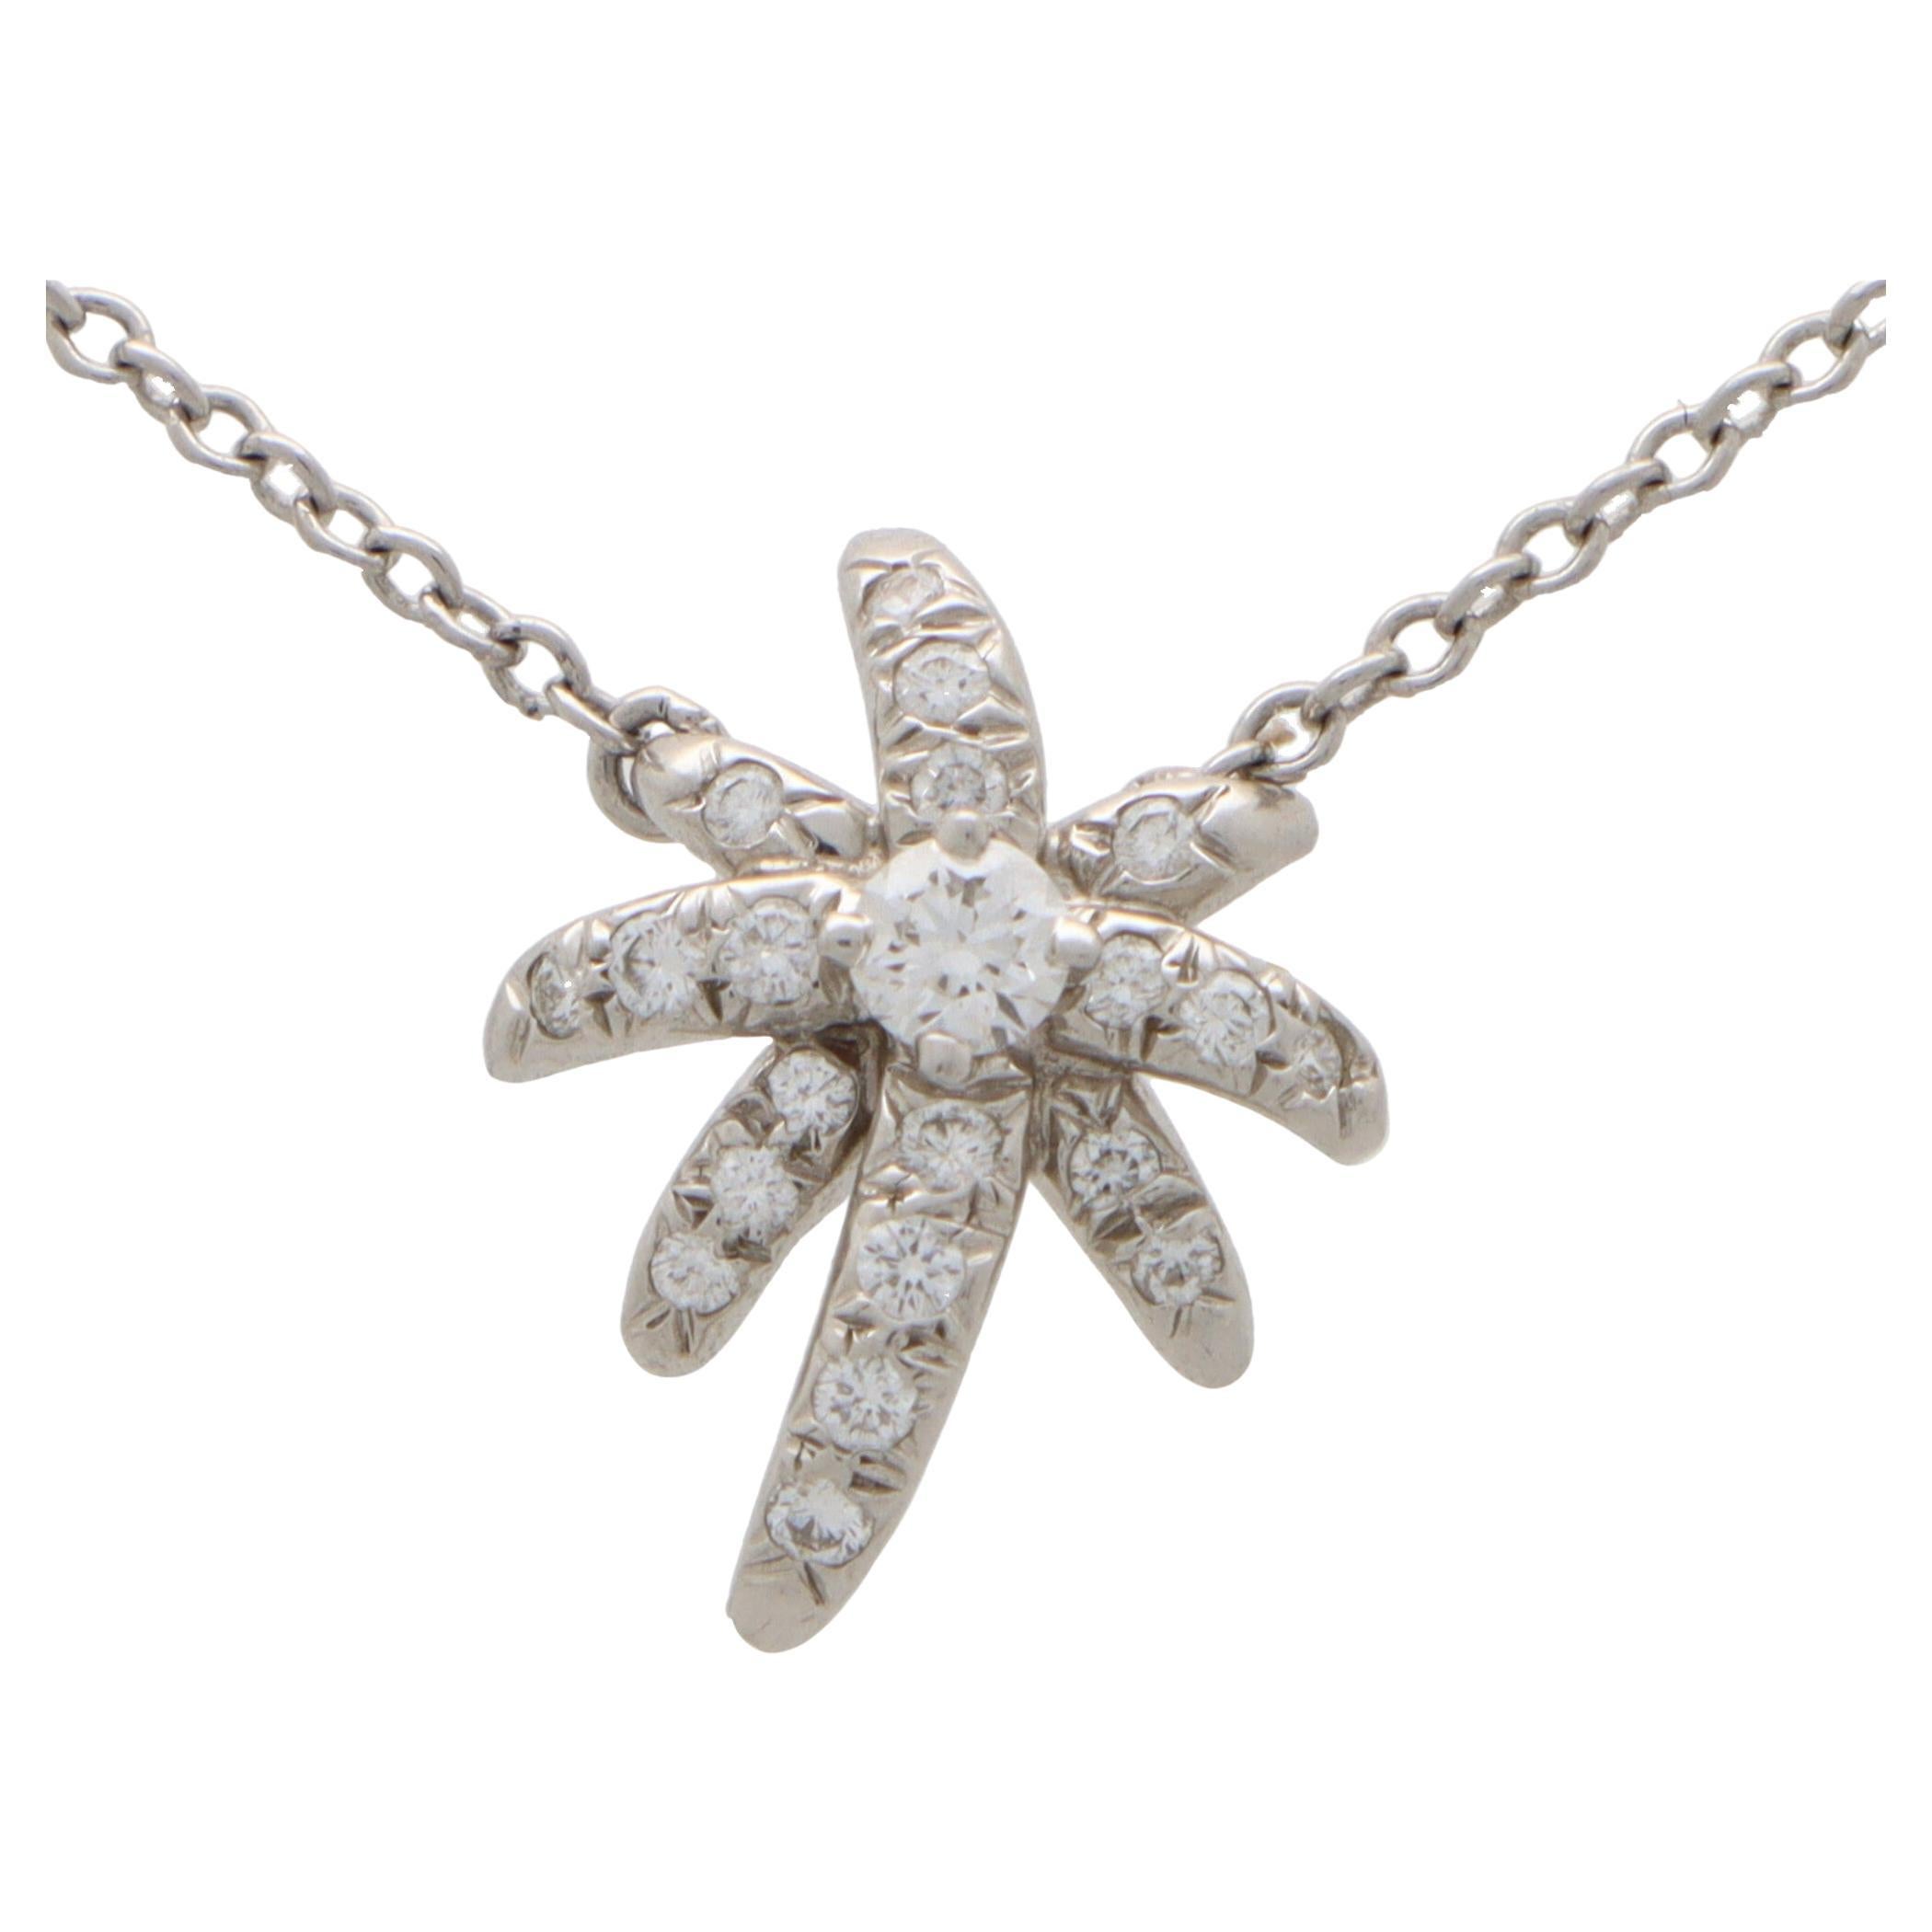 Vintage Tiffany & Co. Fireworks Diamond Pendant Necklace Set in Platinum